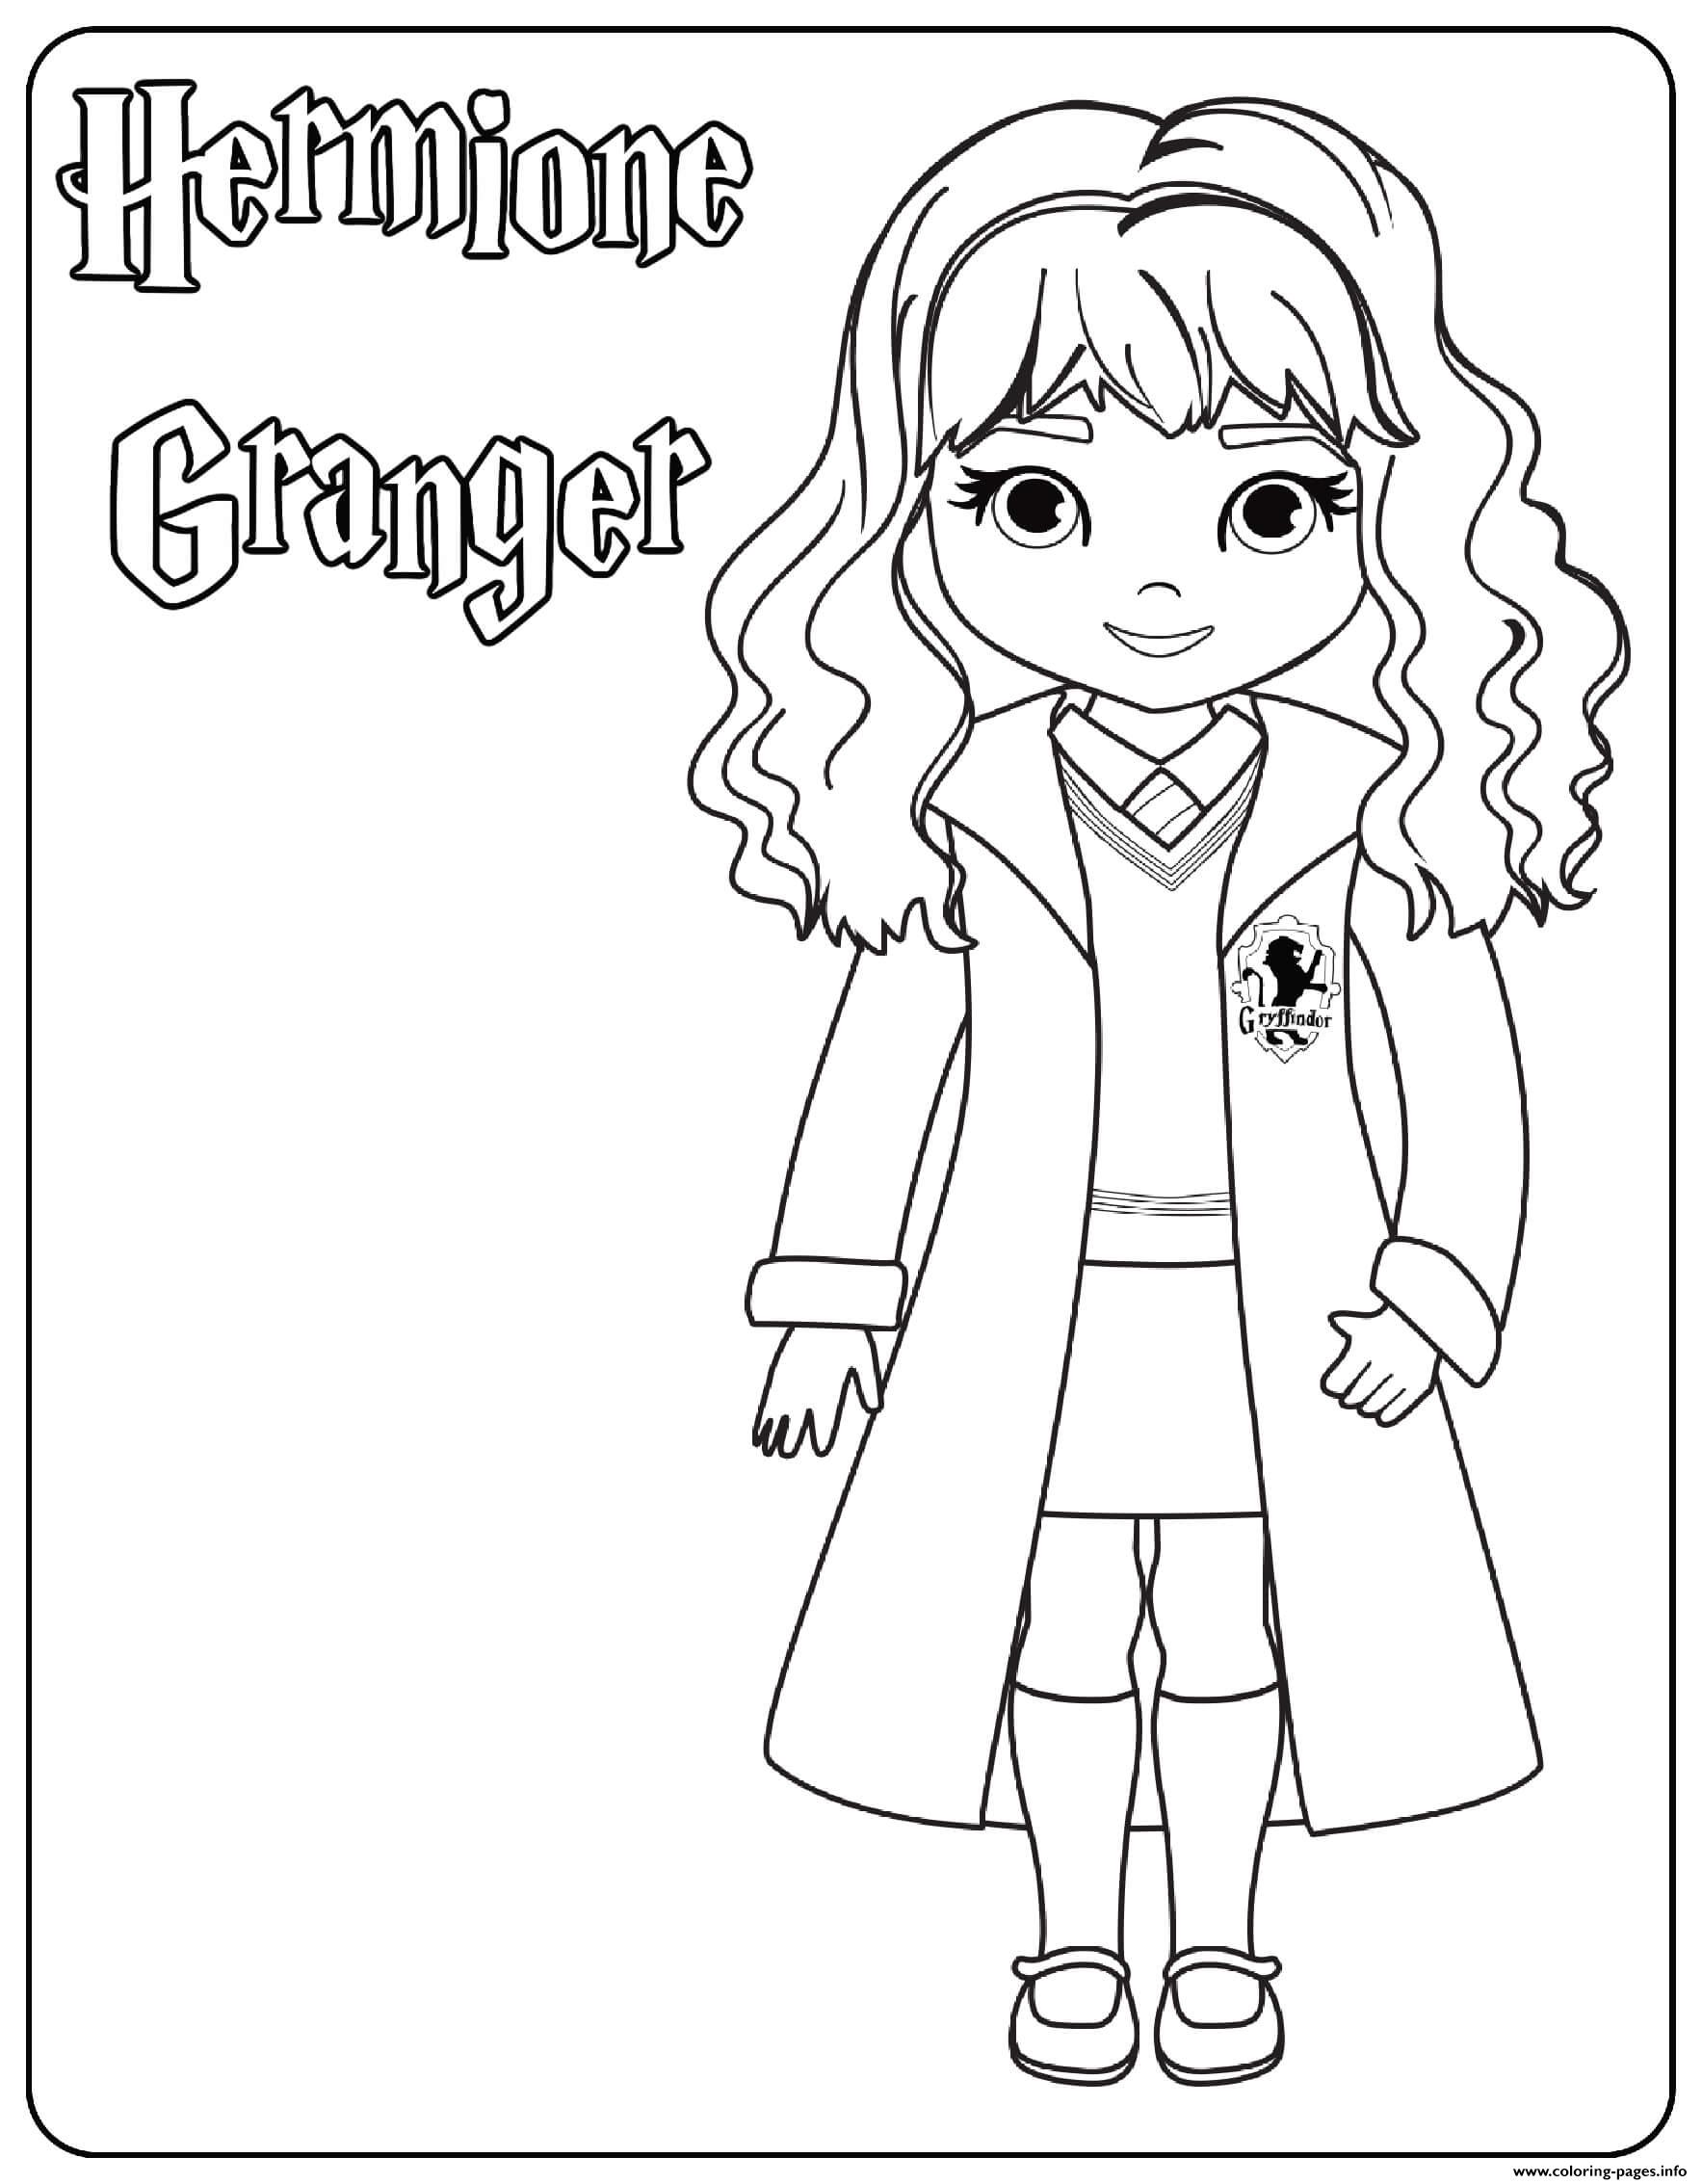 Hermione Granger coloring